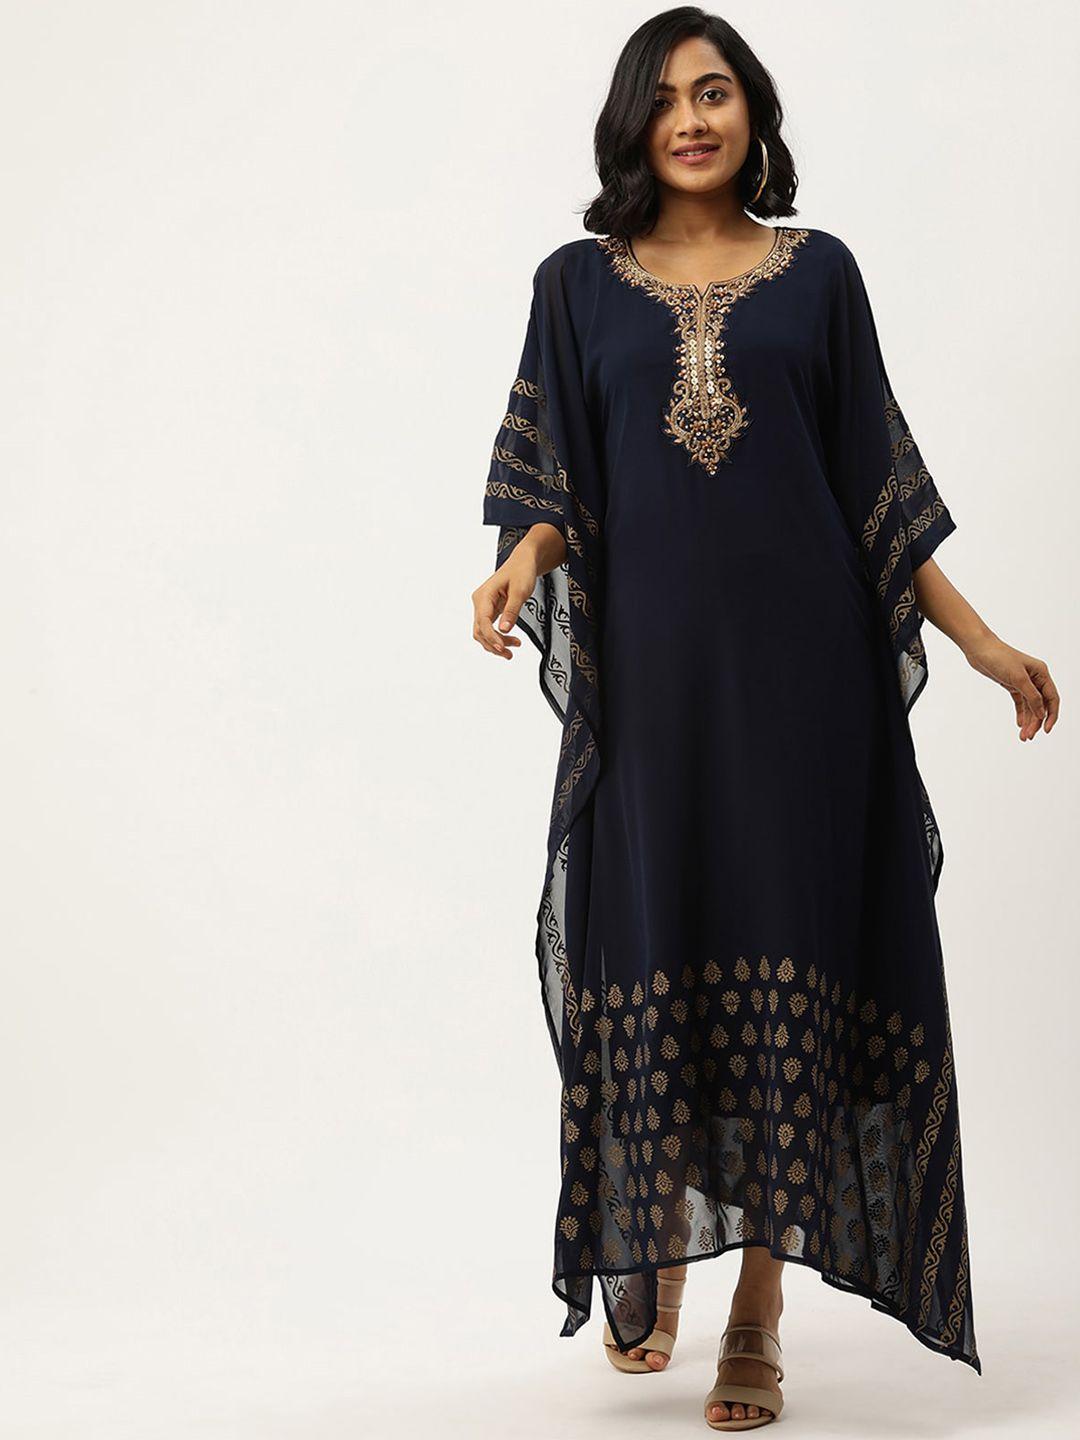 odette women navy blue ethnic motifs embroidered flared sleeves georgette kaftan kurta